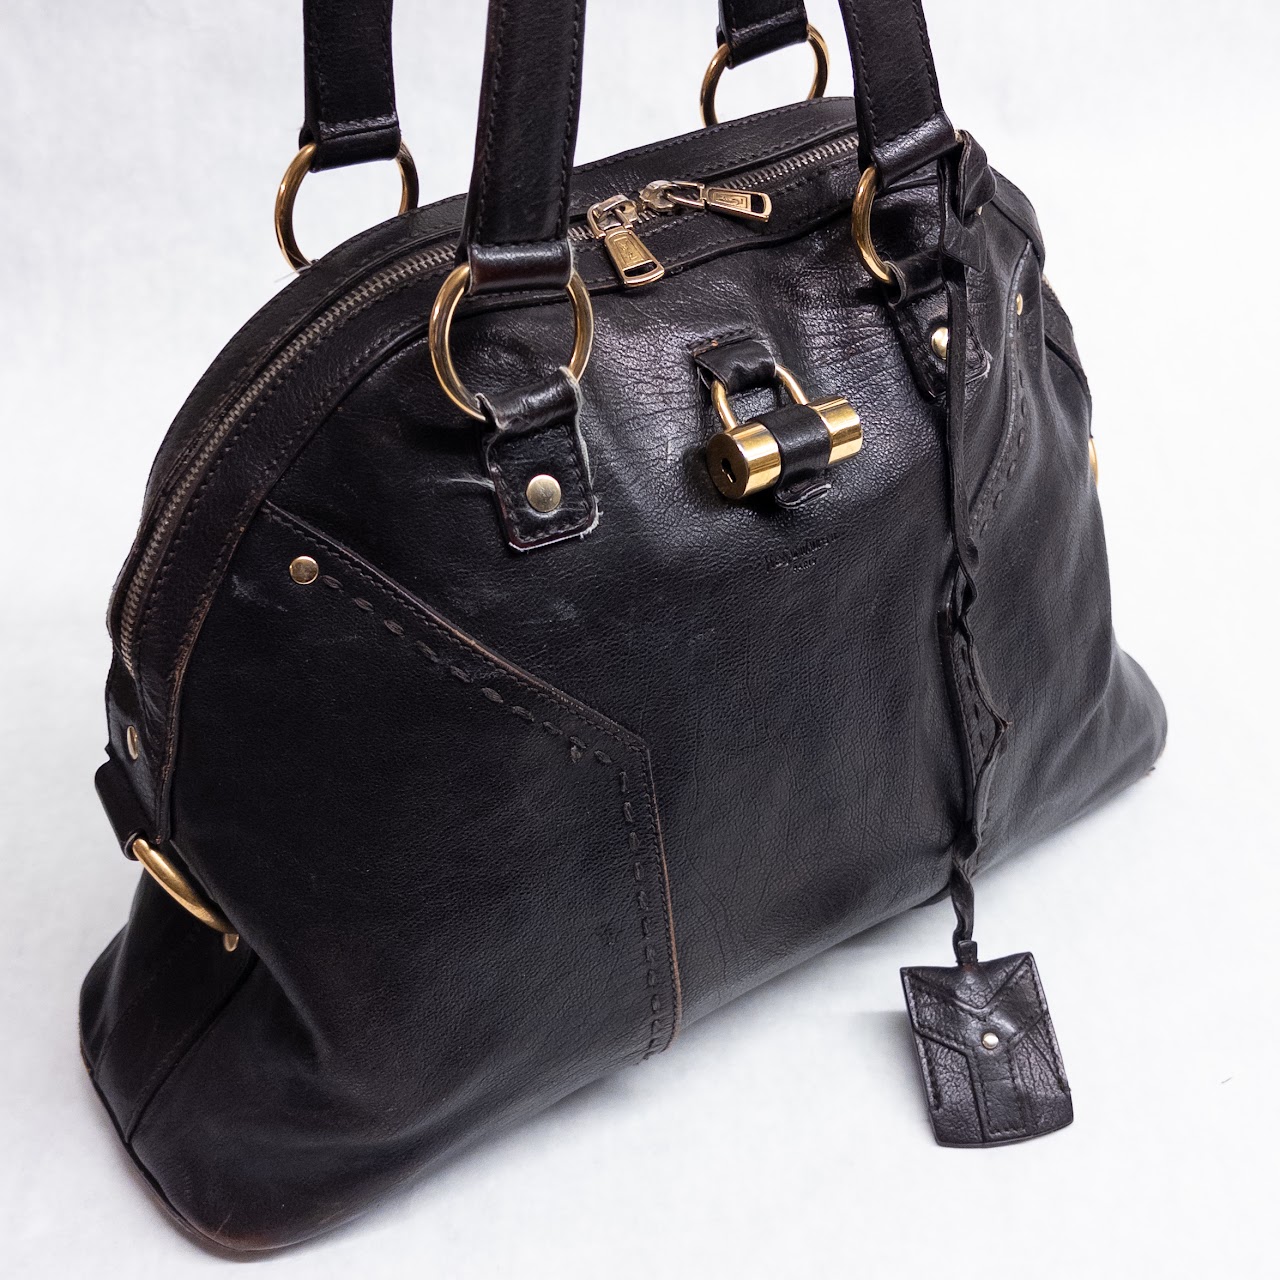 Yves Saint Laurent Muse Handbag